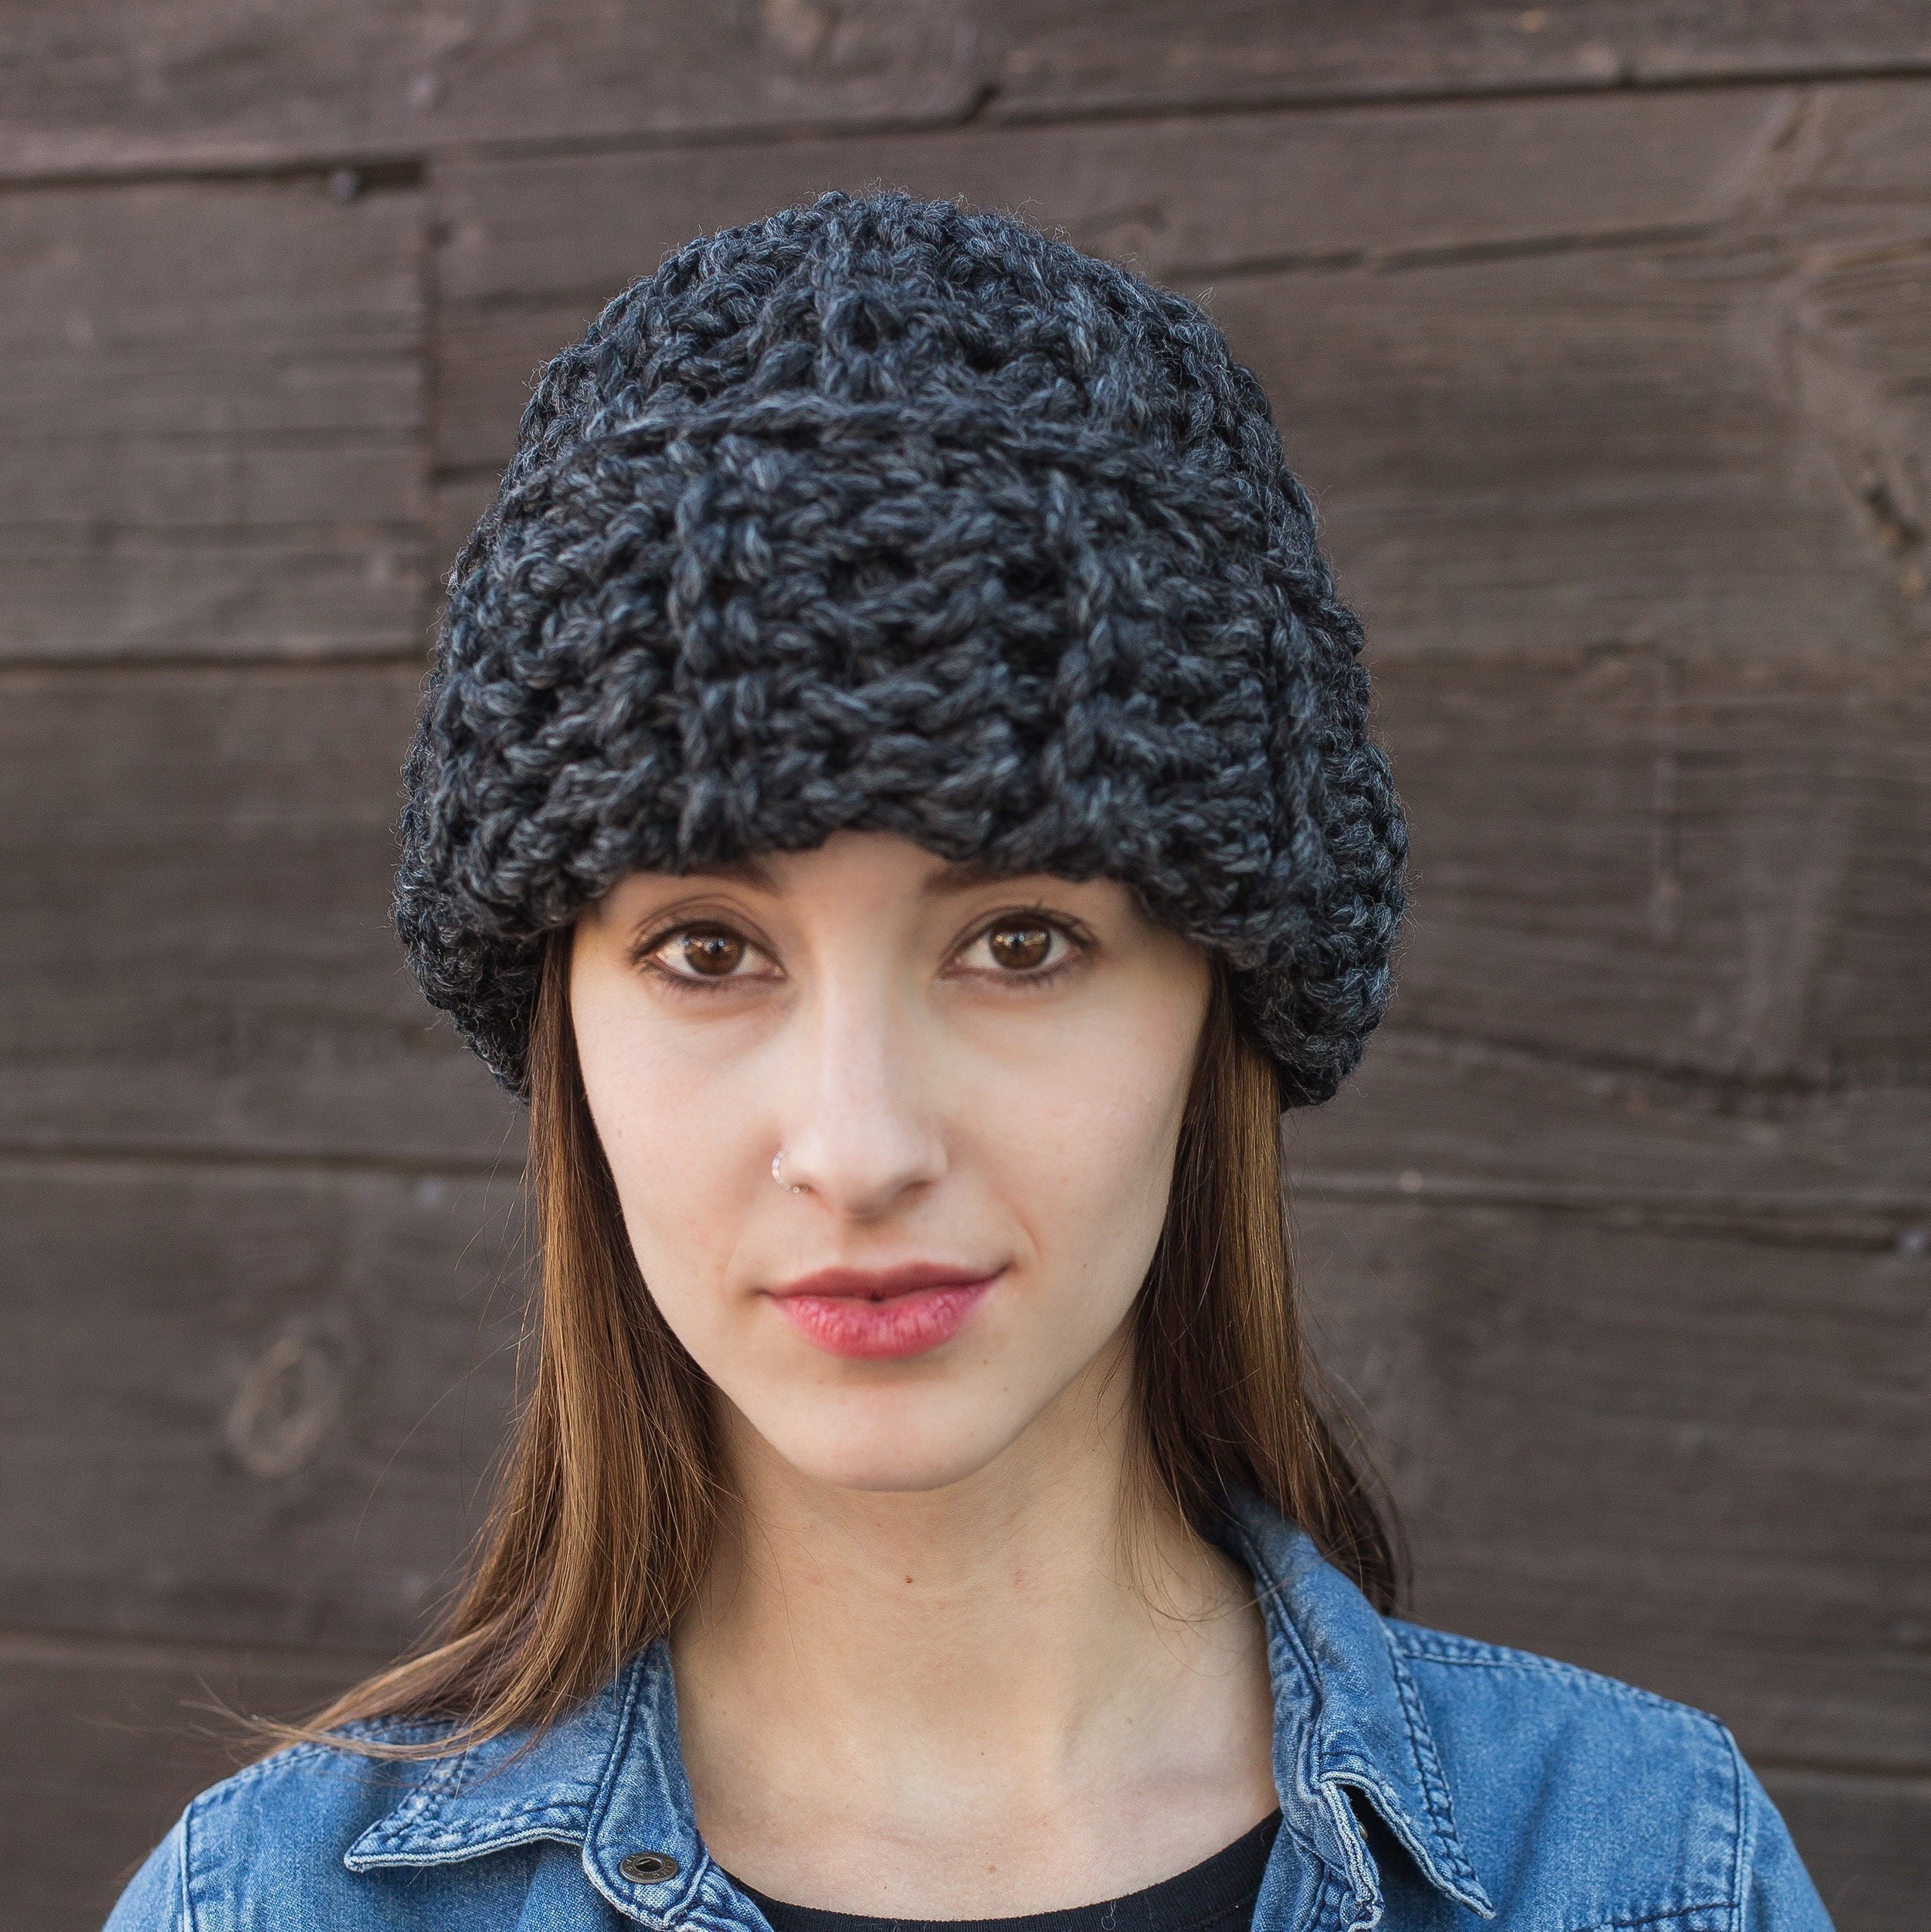 Cuffed Beanie Knit Wool Hat Slouchy Hat THE CLASSIC CUFF | Etsy